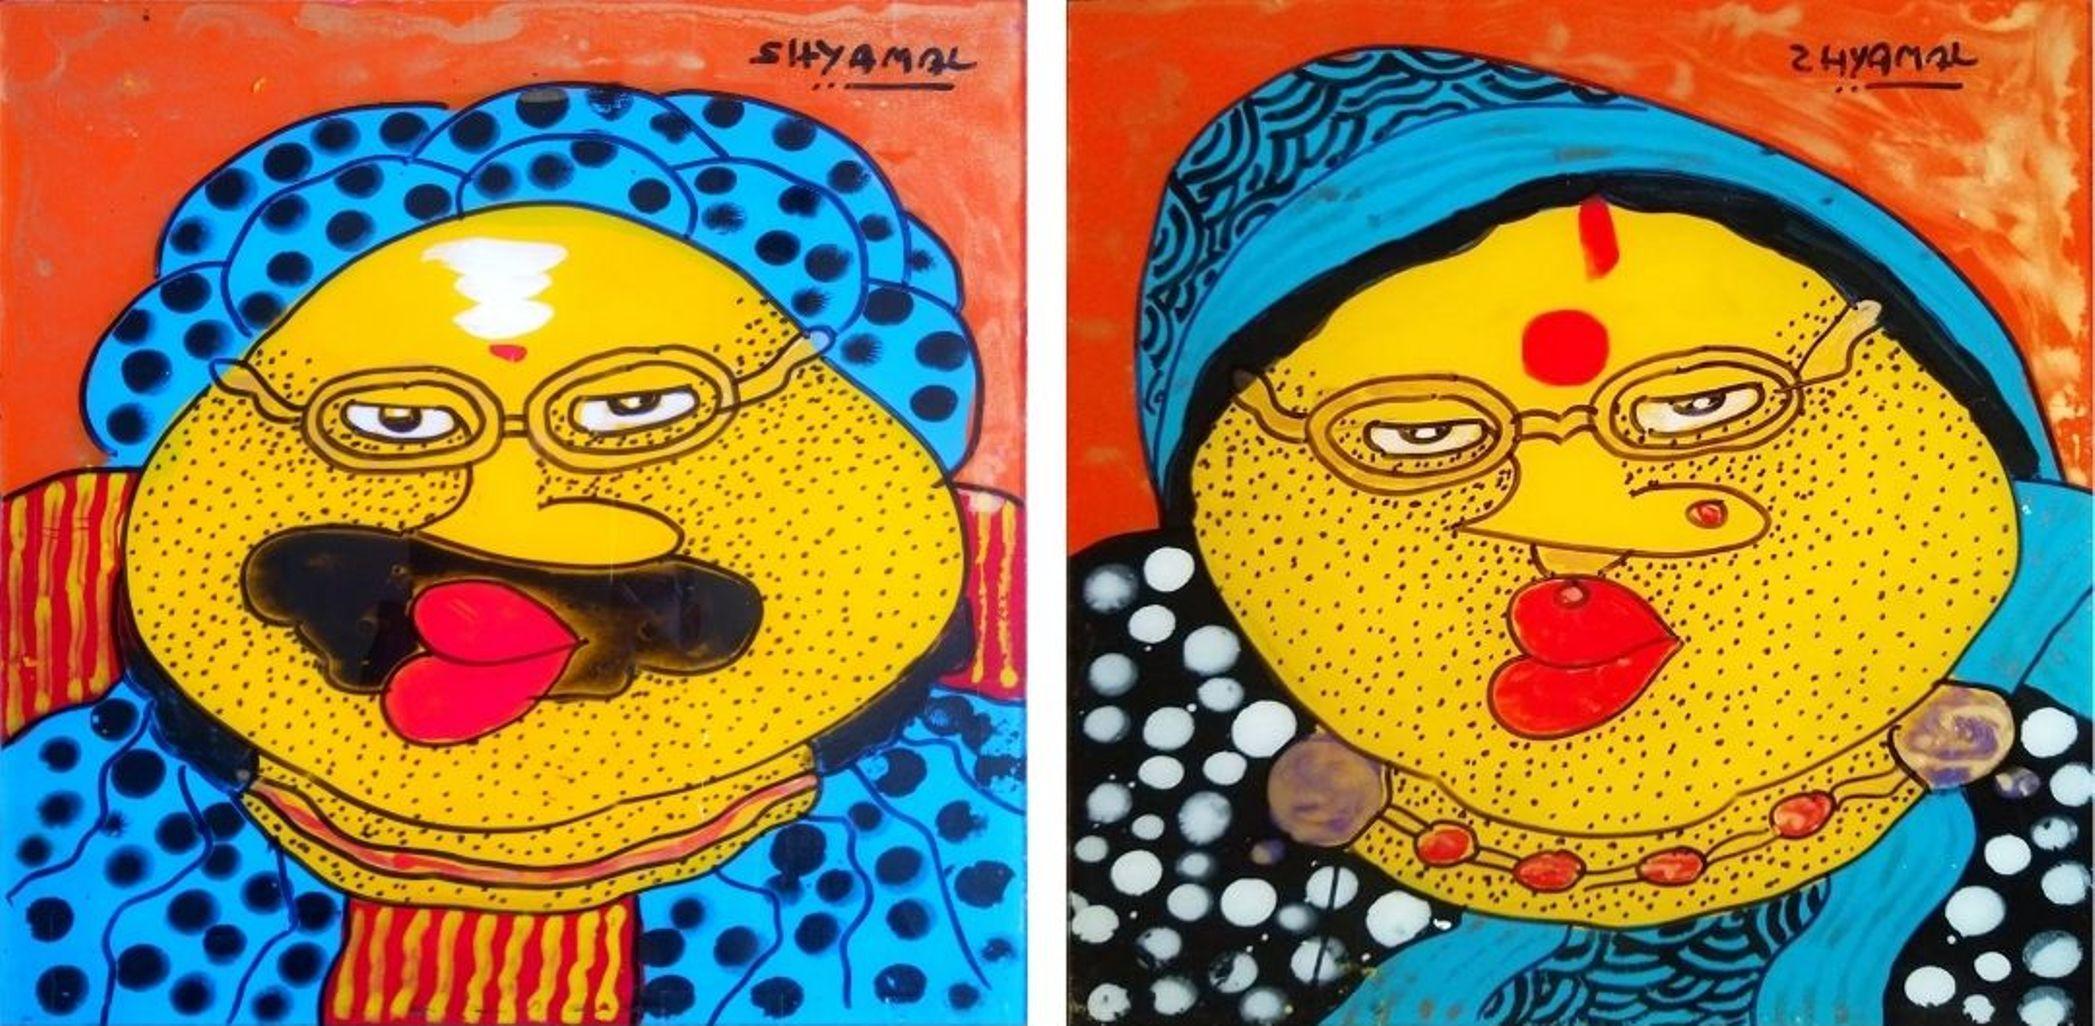 Bawa Biwi, Oil Reverse on Acrylic Sheet (Set of 2) by Contemporary "In Stock" - Art by Shyamal Mukherjee